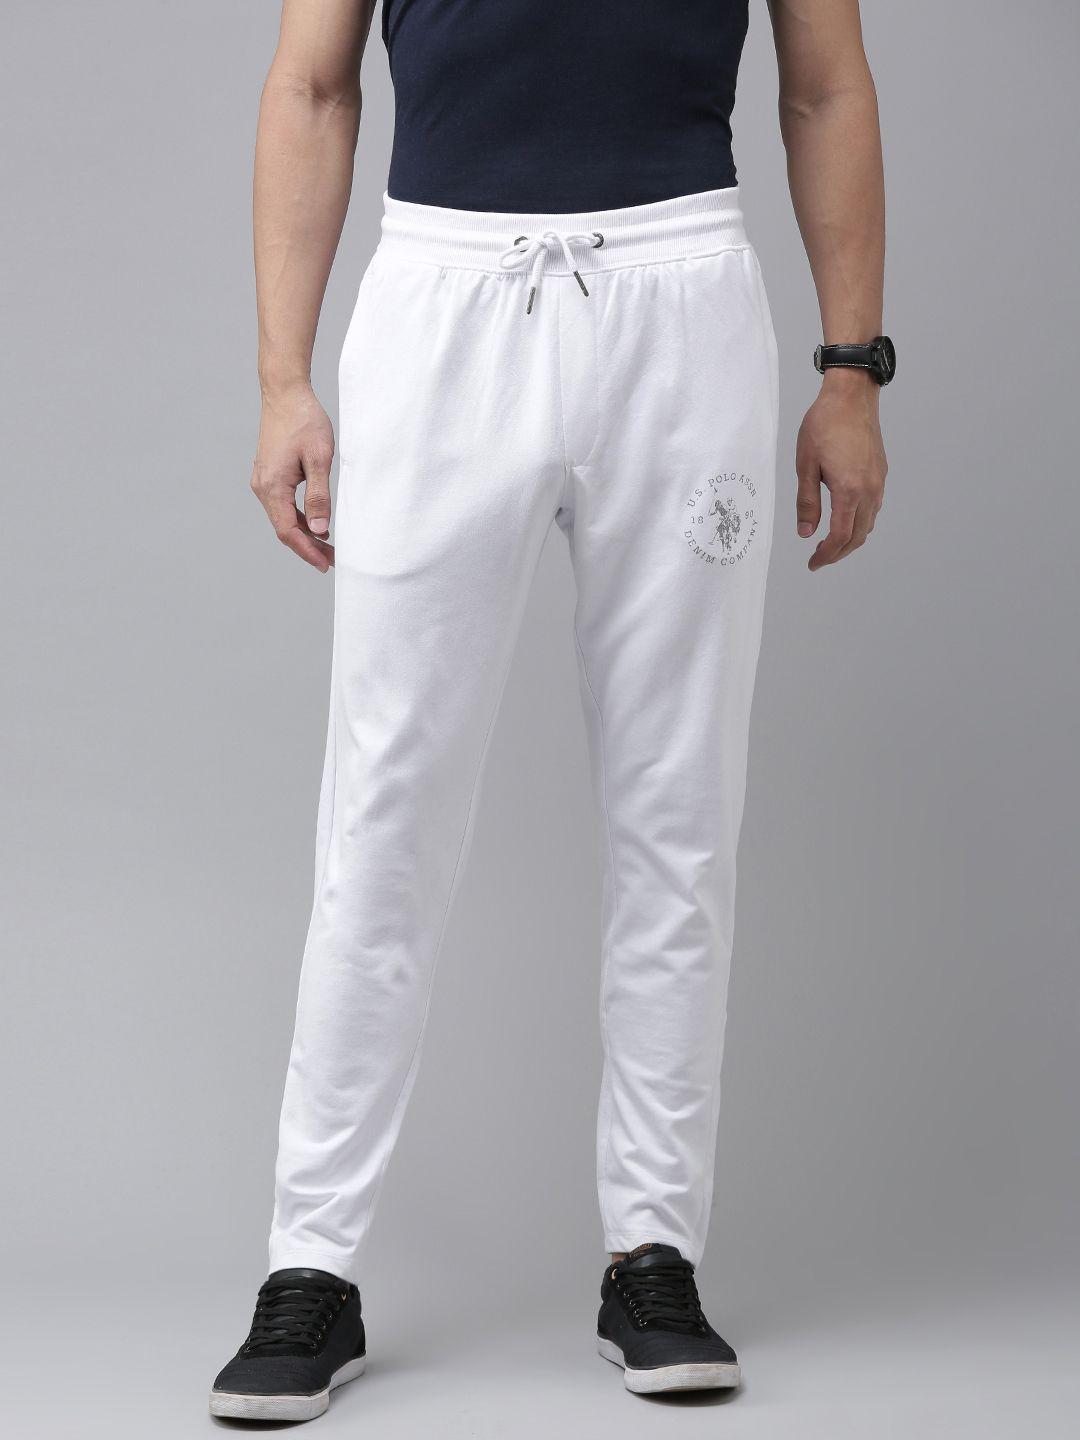 u.s. polo assn. denim co. men white printed track pants